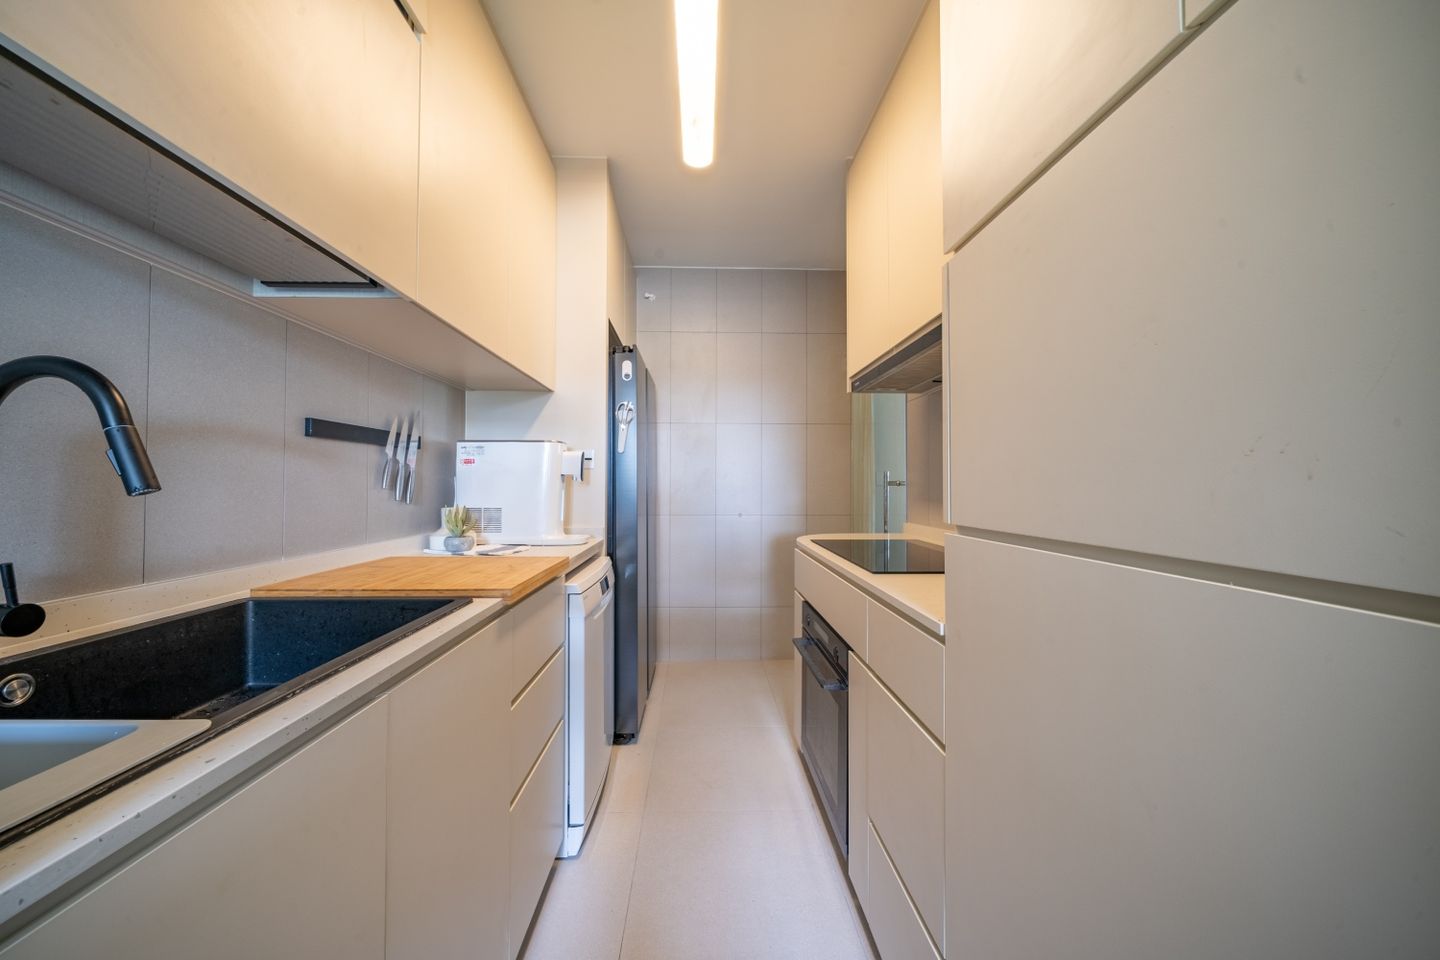 Parallel Kitchen Design With Closed Storage - Livspace